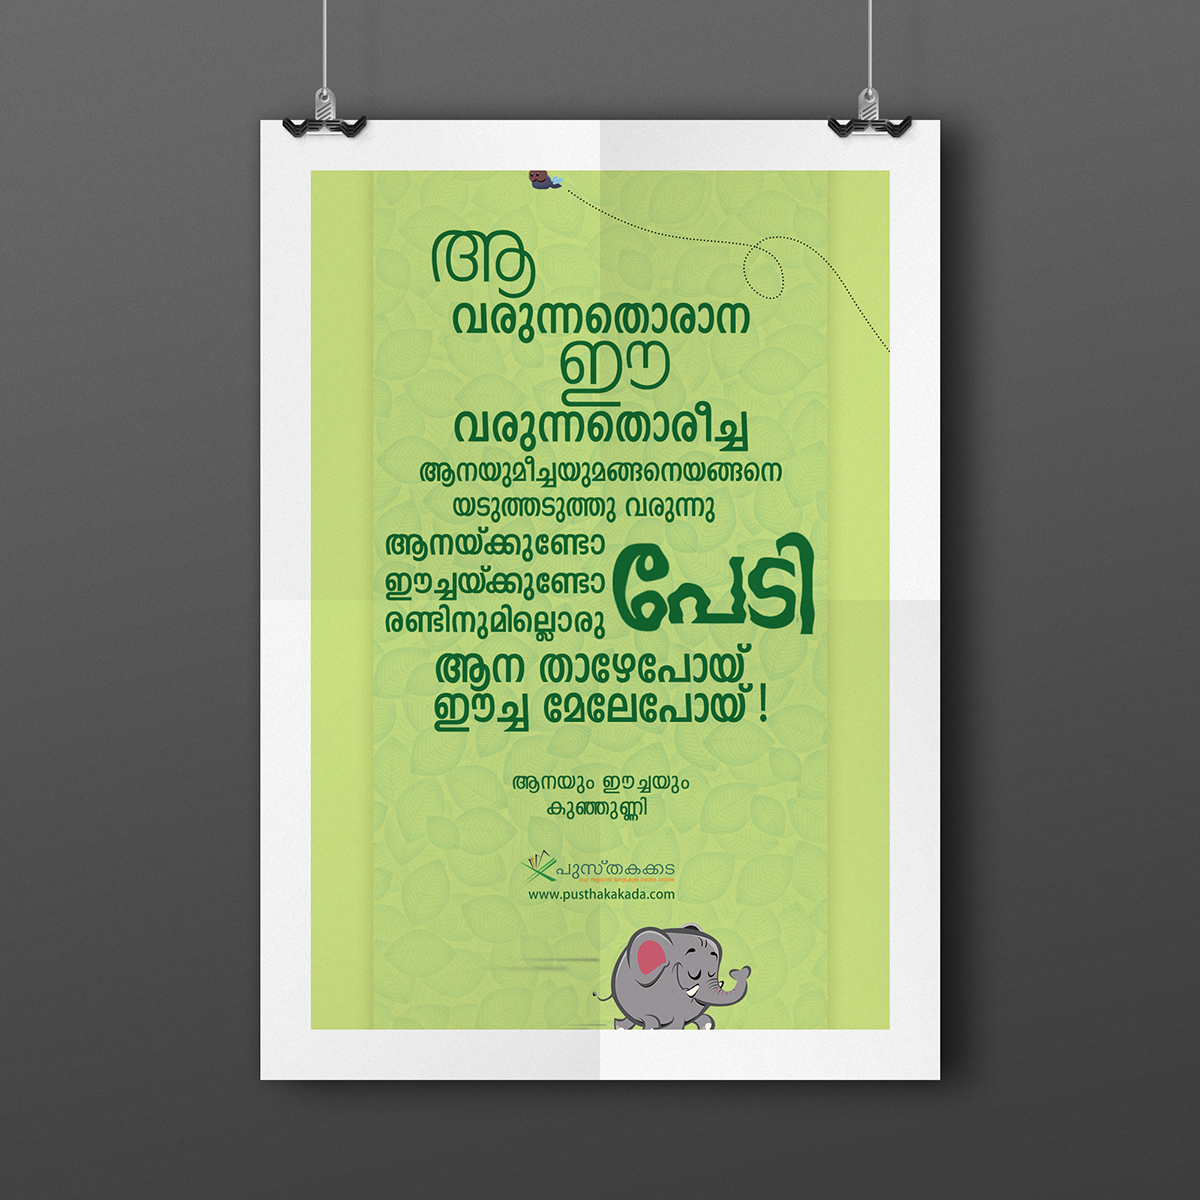 Malayalam poems malayalam qoutes typo pusthakakada Facebook promotion vaikom muhammad basheer Balachandran chullikadu O V Vijayan Kunjunni mash virankutty